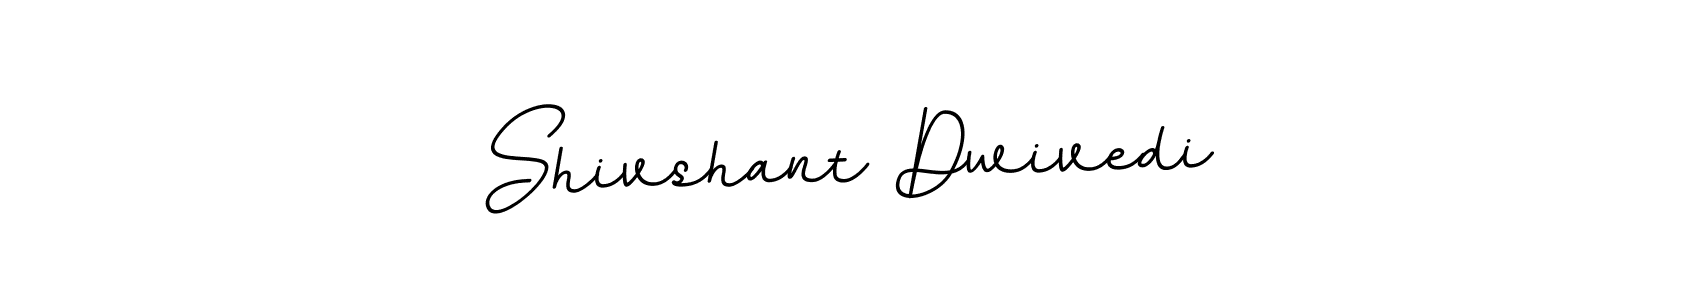 How to Draw Shivshant Dwivedi signature style? BallpointsItalic-DORy9 is a latest design signature styles for name Shivshant Dwivedi. Shivshant Dwivedi signature style 11 images and pictures png